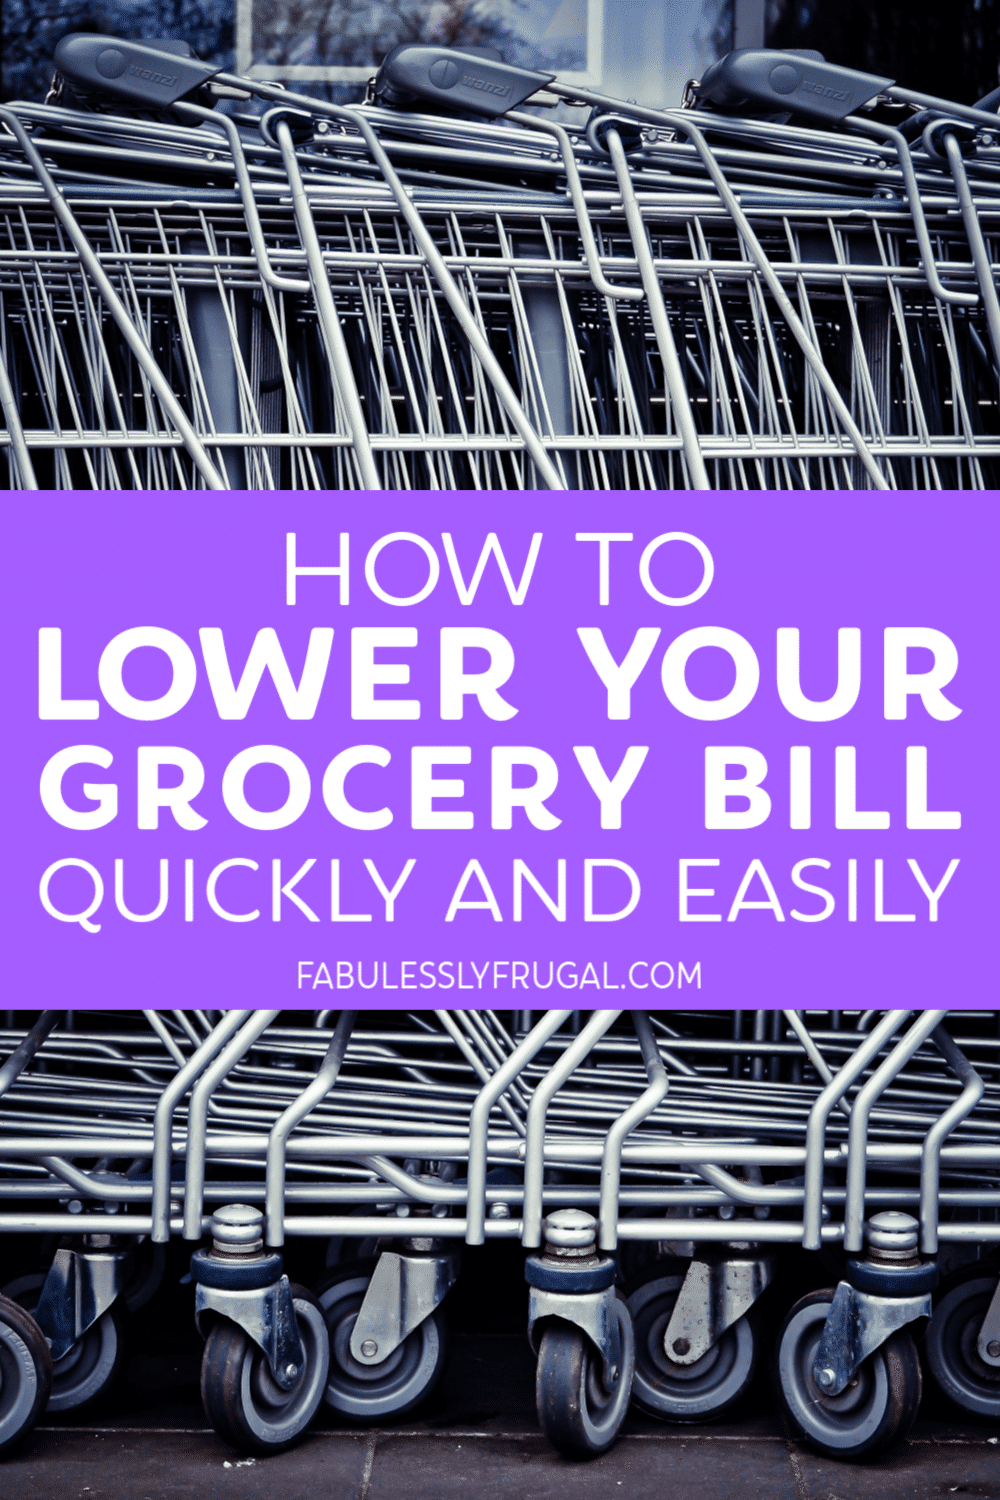 Lower grocery bill